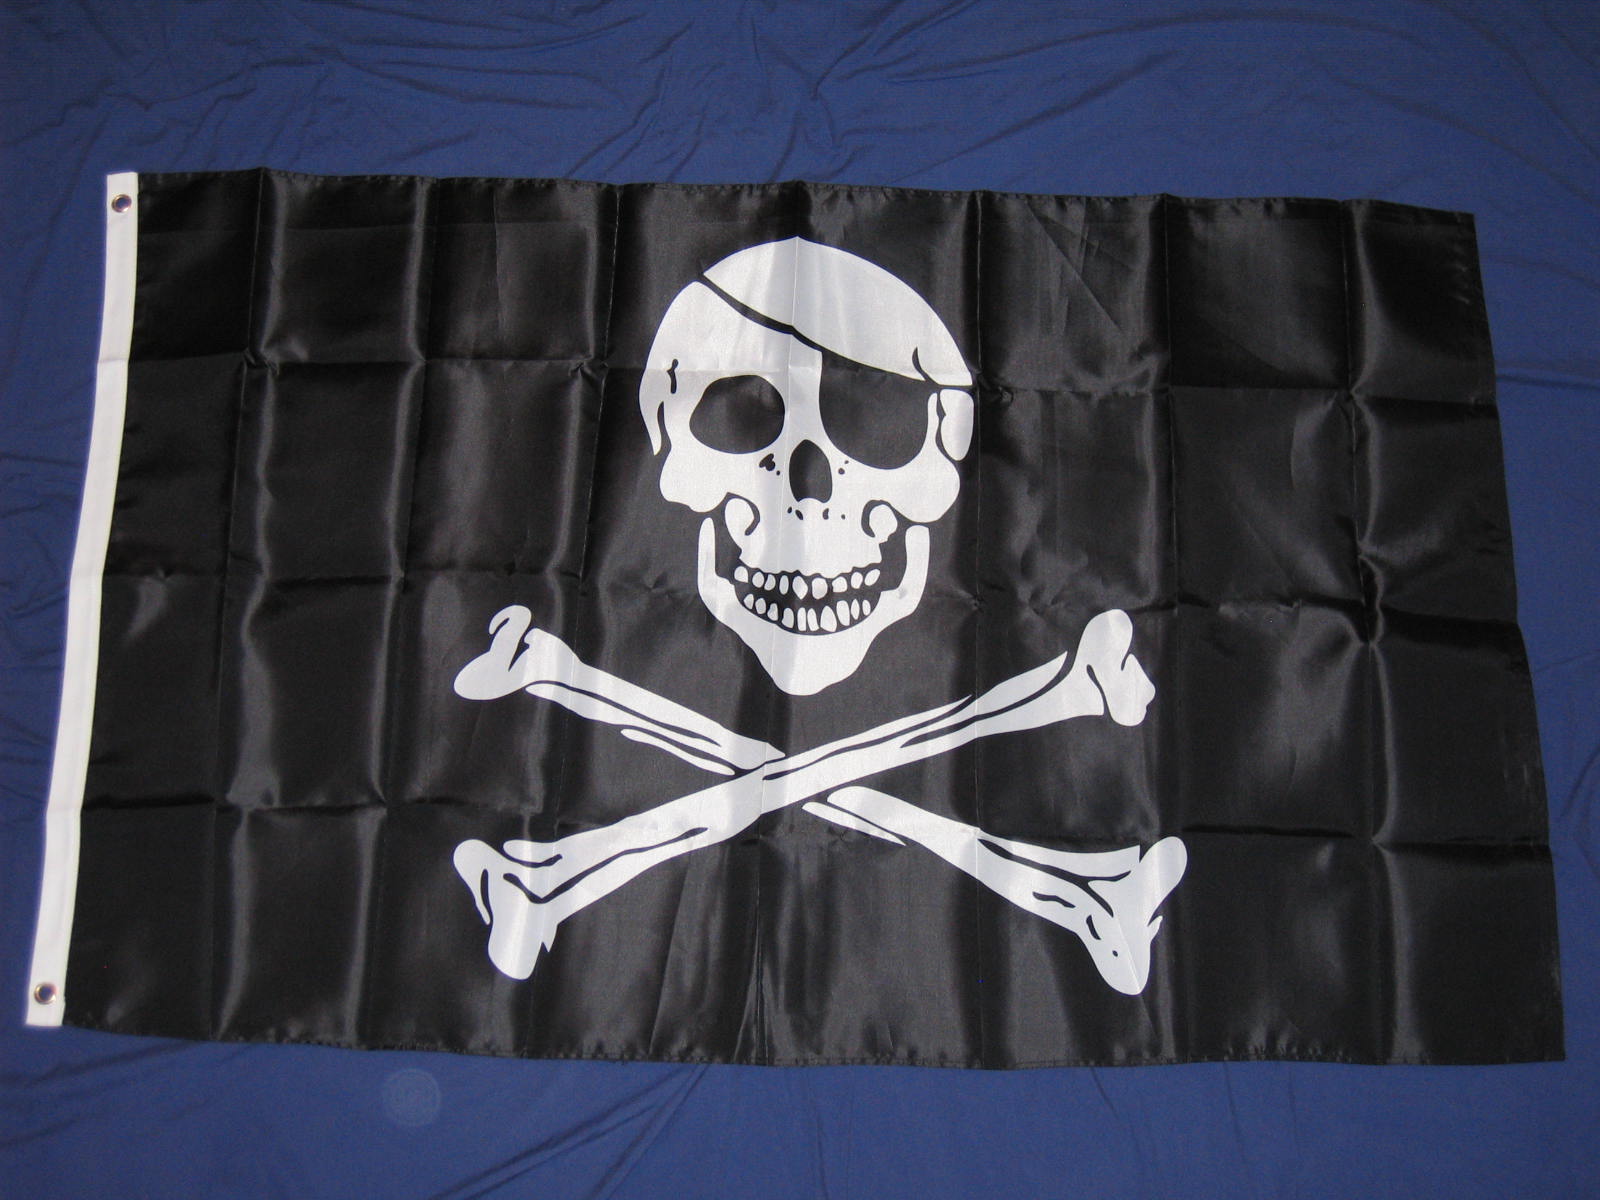 A Pirate Flag